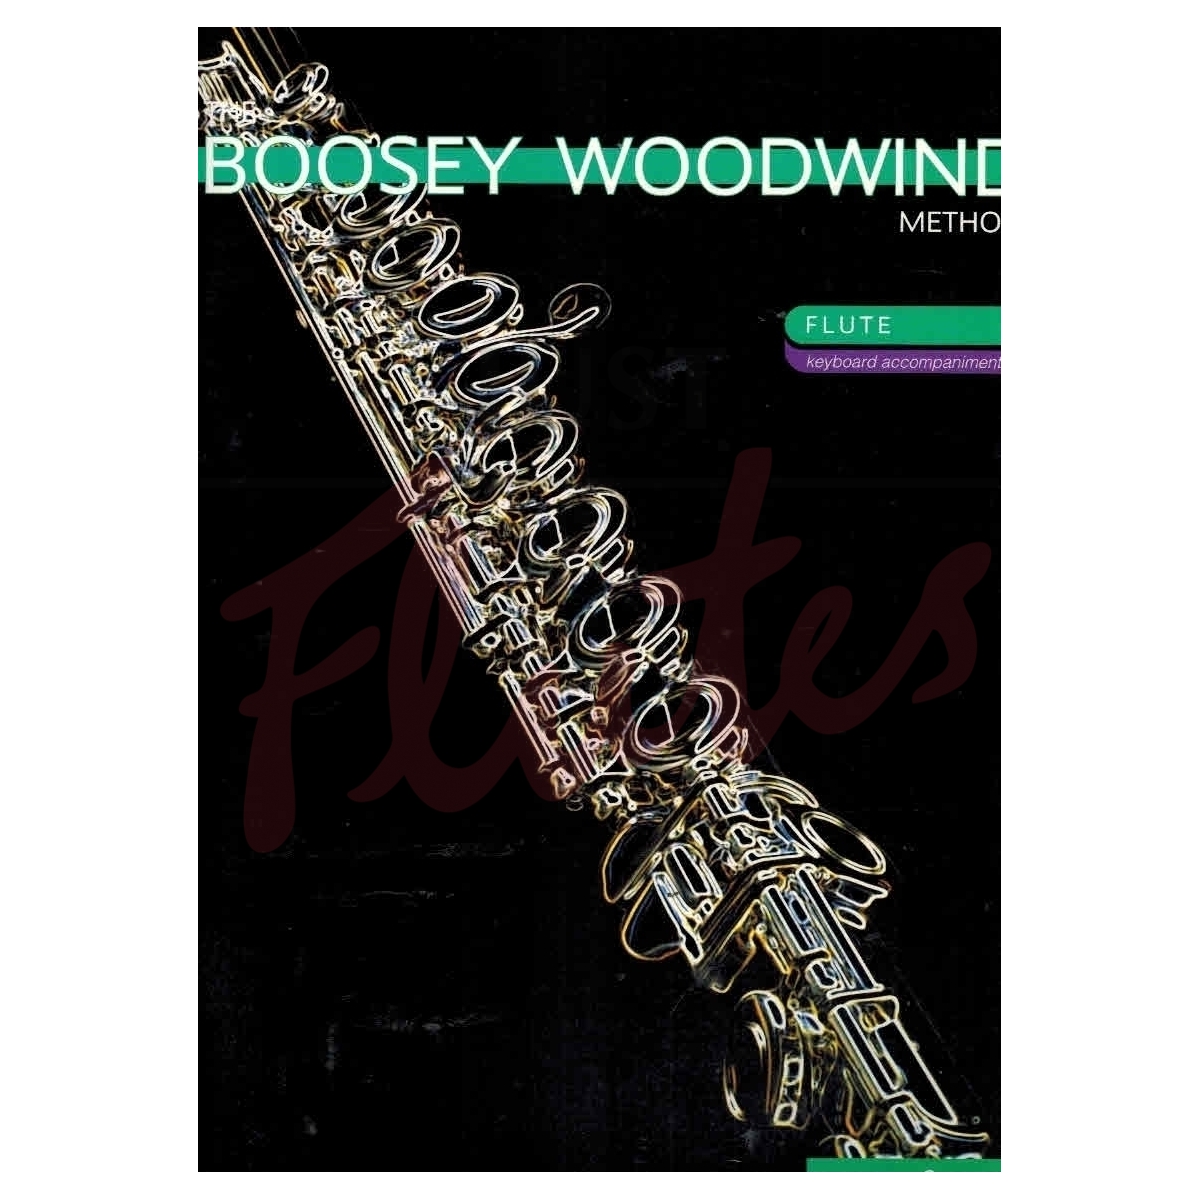 The Boosey Woodwind Method [Flute] Piano Accompaniment